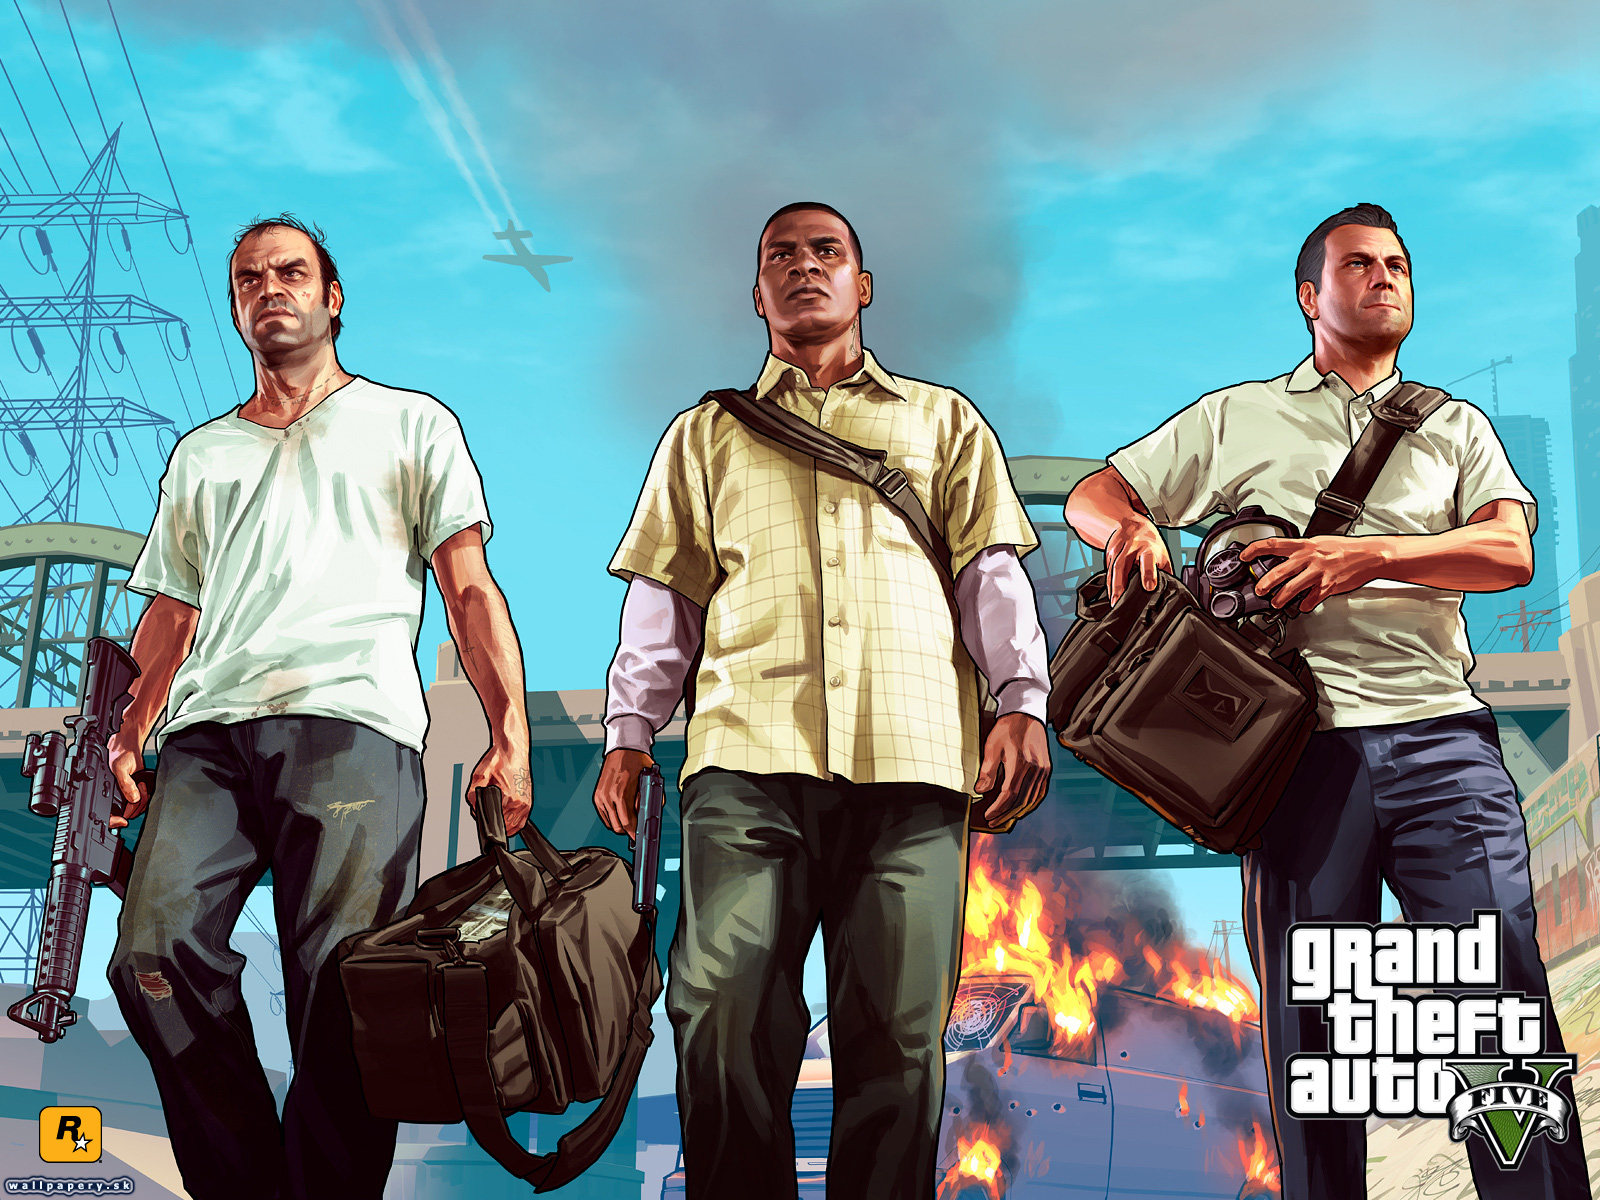 Grand Theft Auto V - wallpaper 4